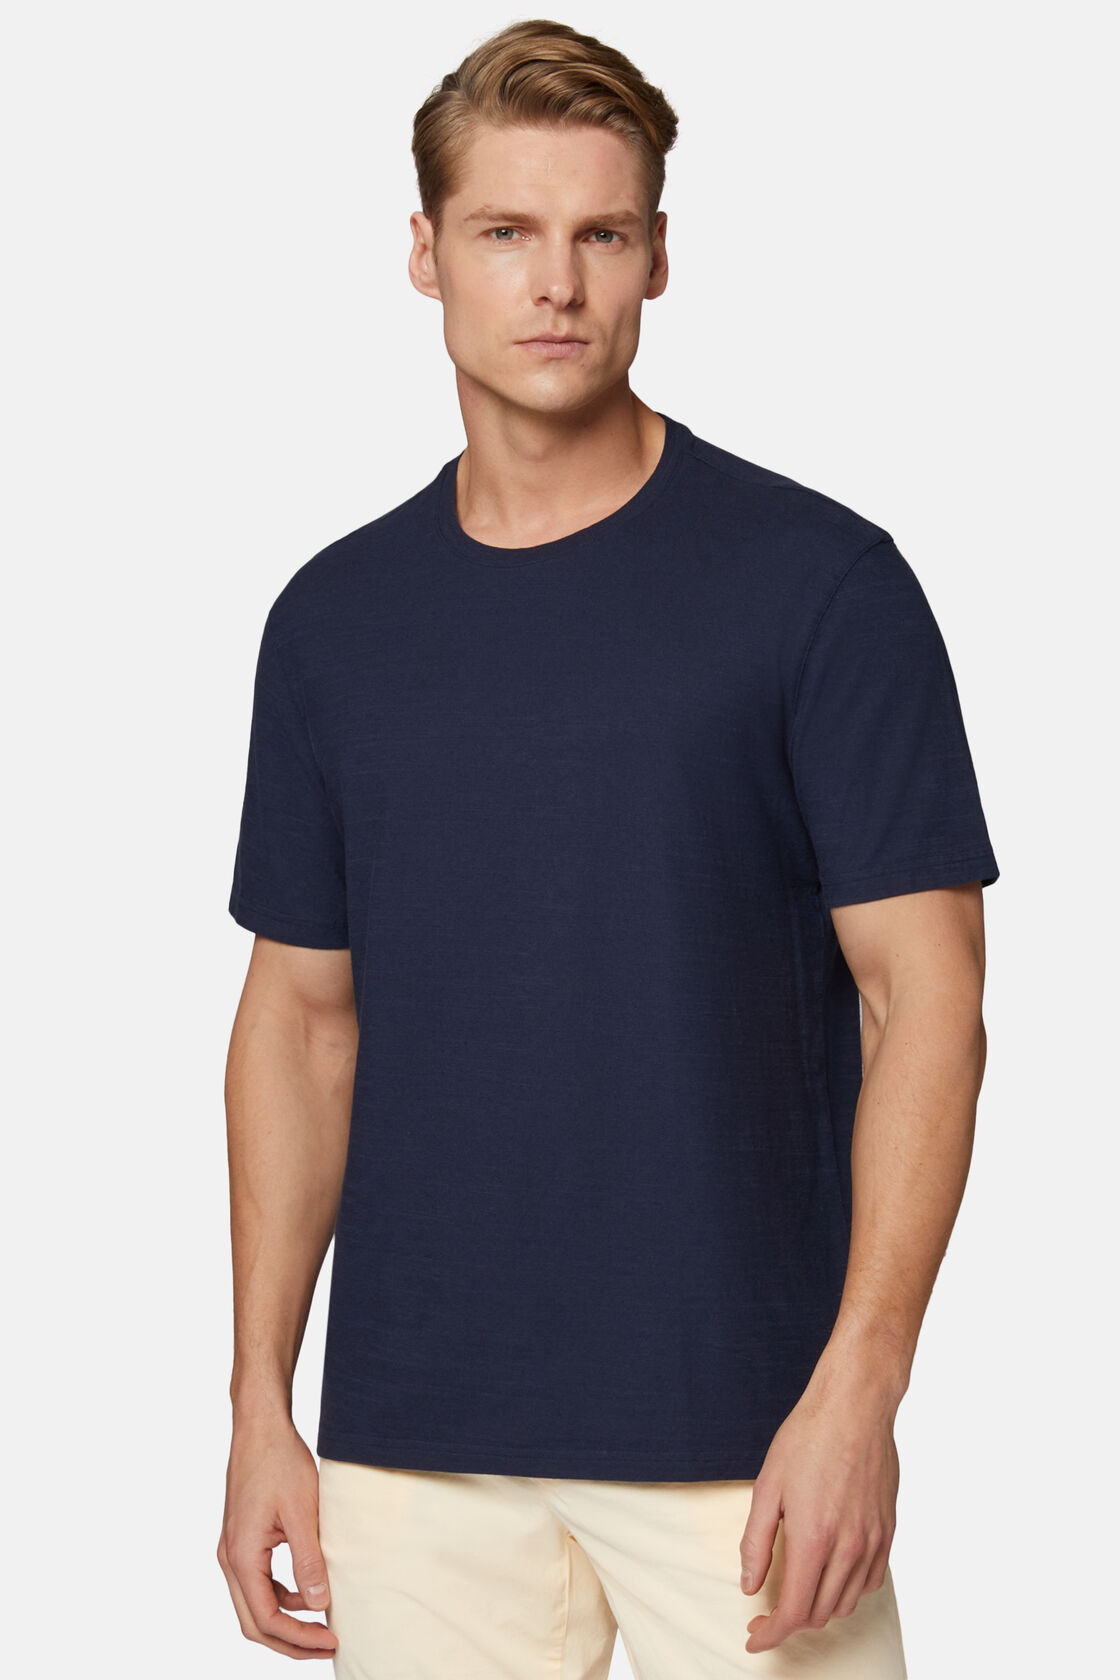 T-Shirt in Cotton Slub Jersey, Navy blue, hi-res